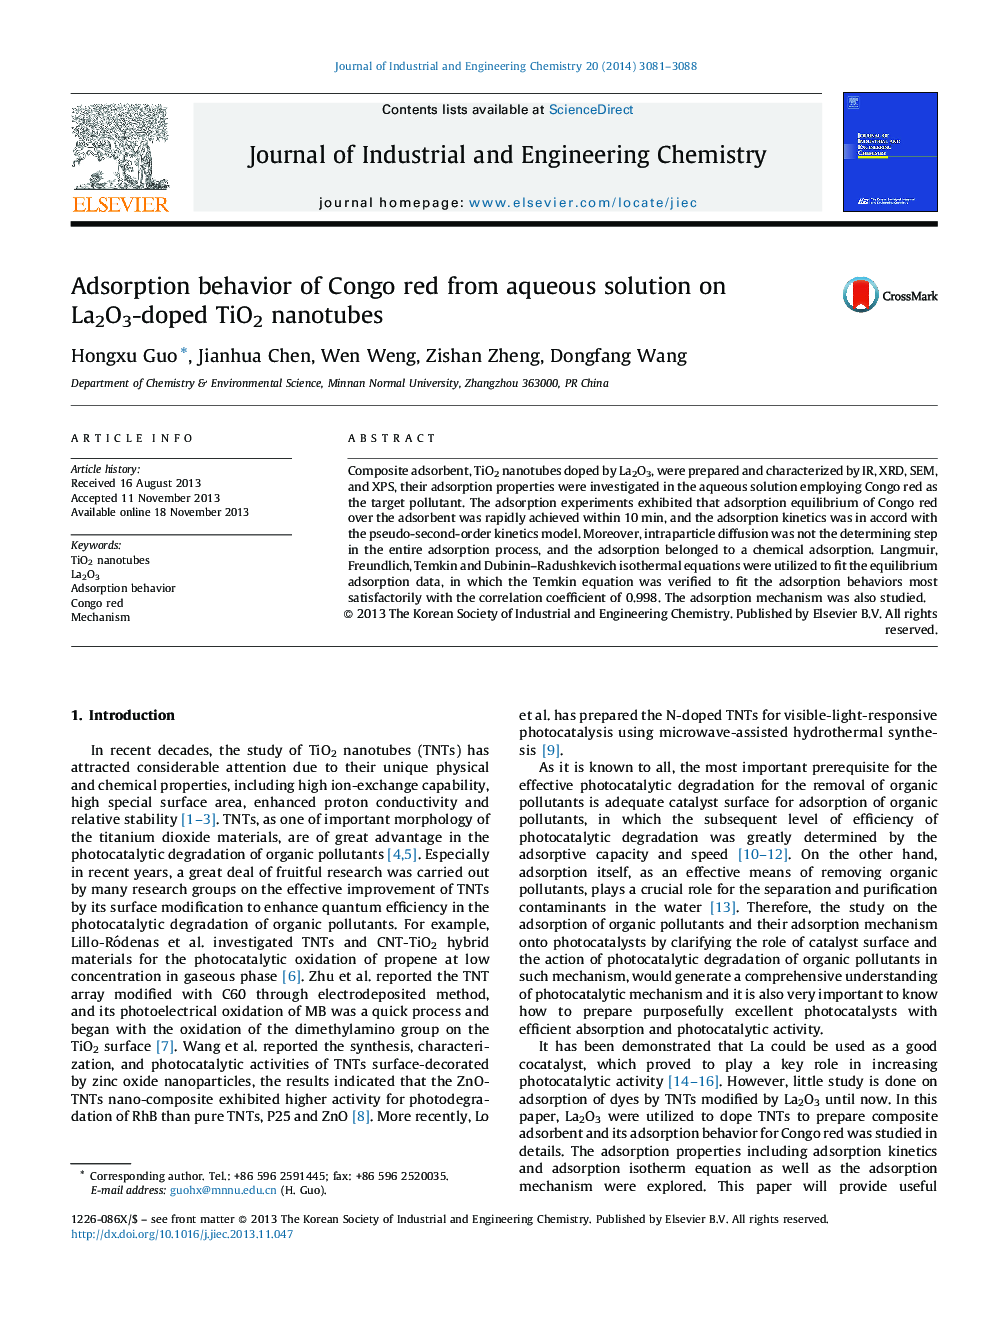 Adsorption behavior of Congo red from aqueous solution on La2O3-doped TiO2 nanotubes